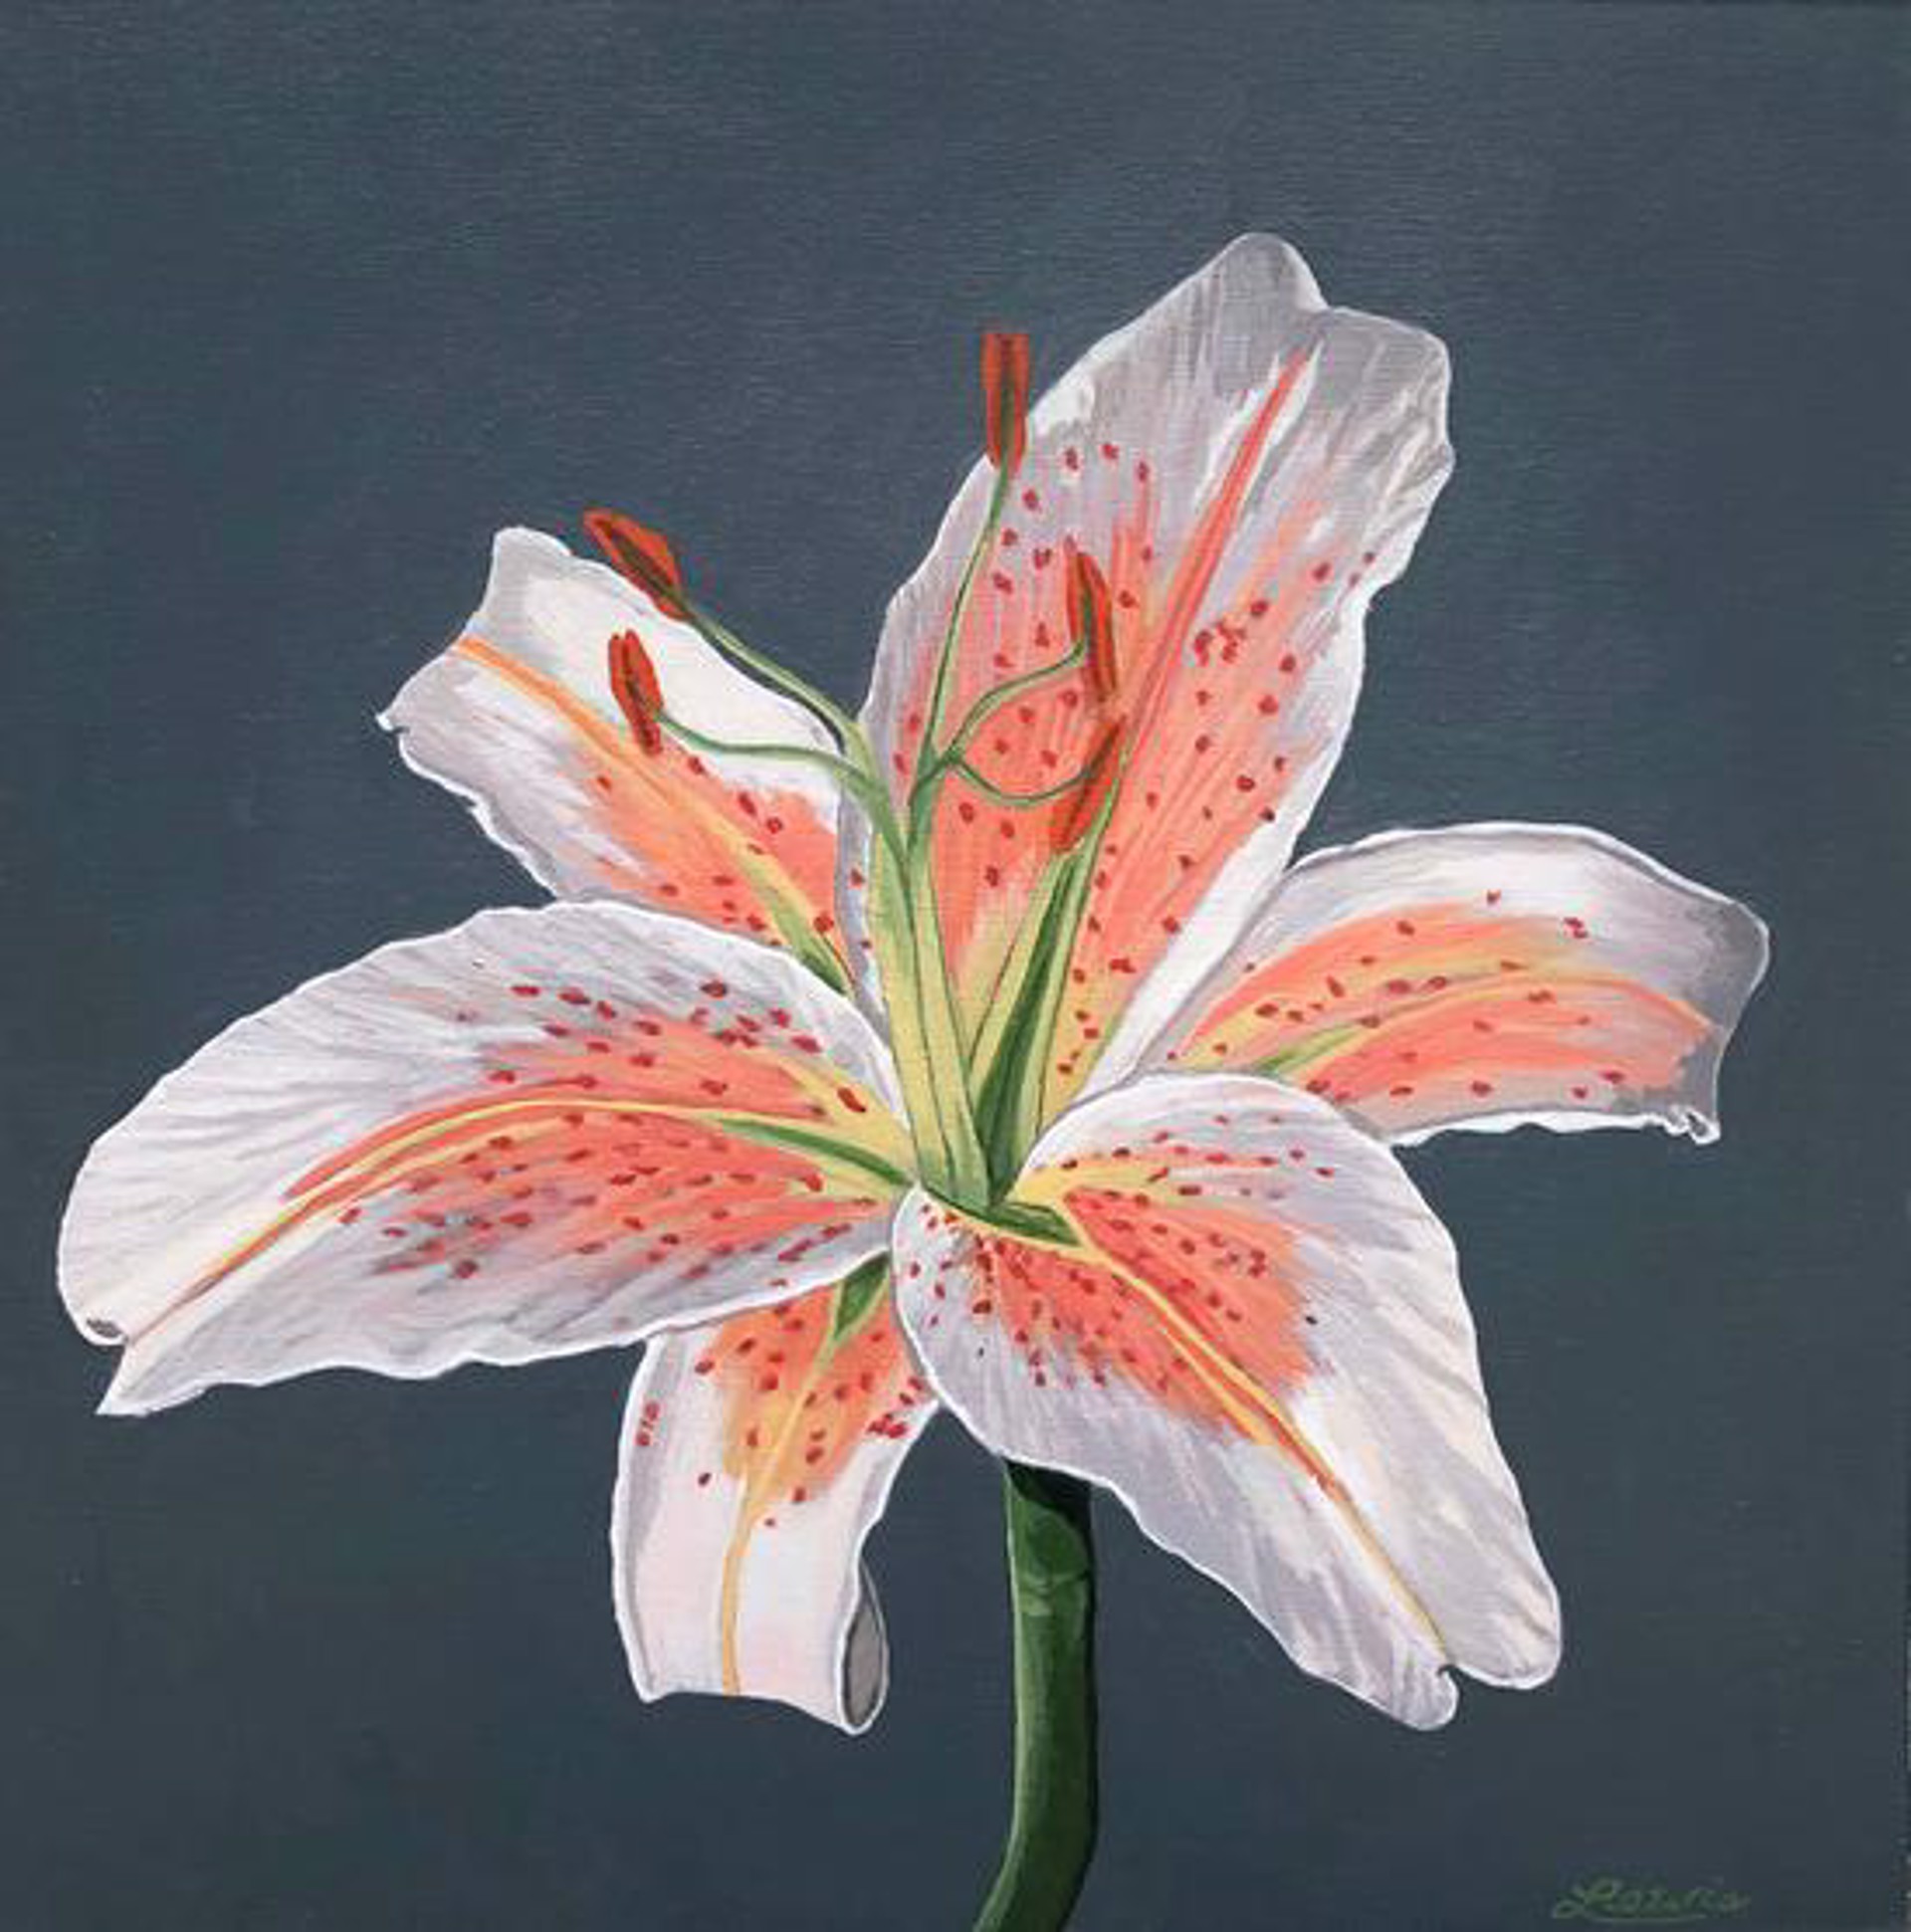 Lily by Gordon Lewis